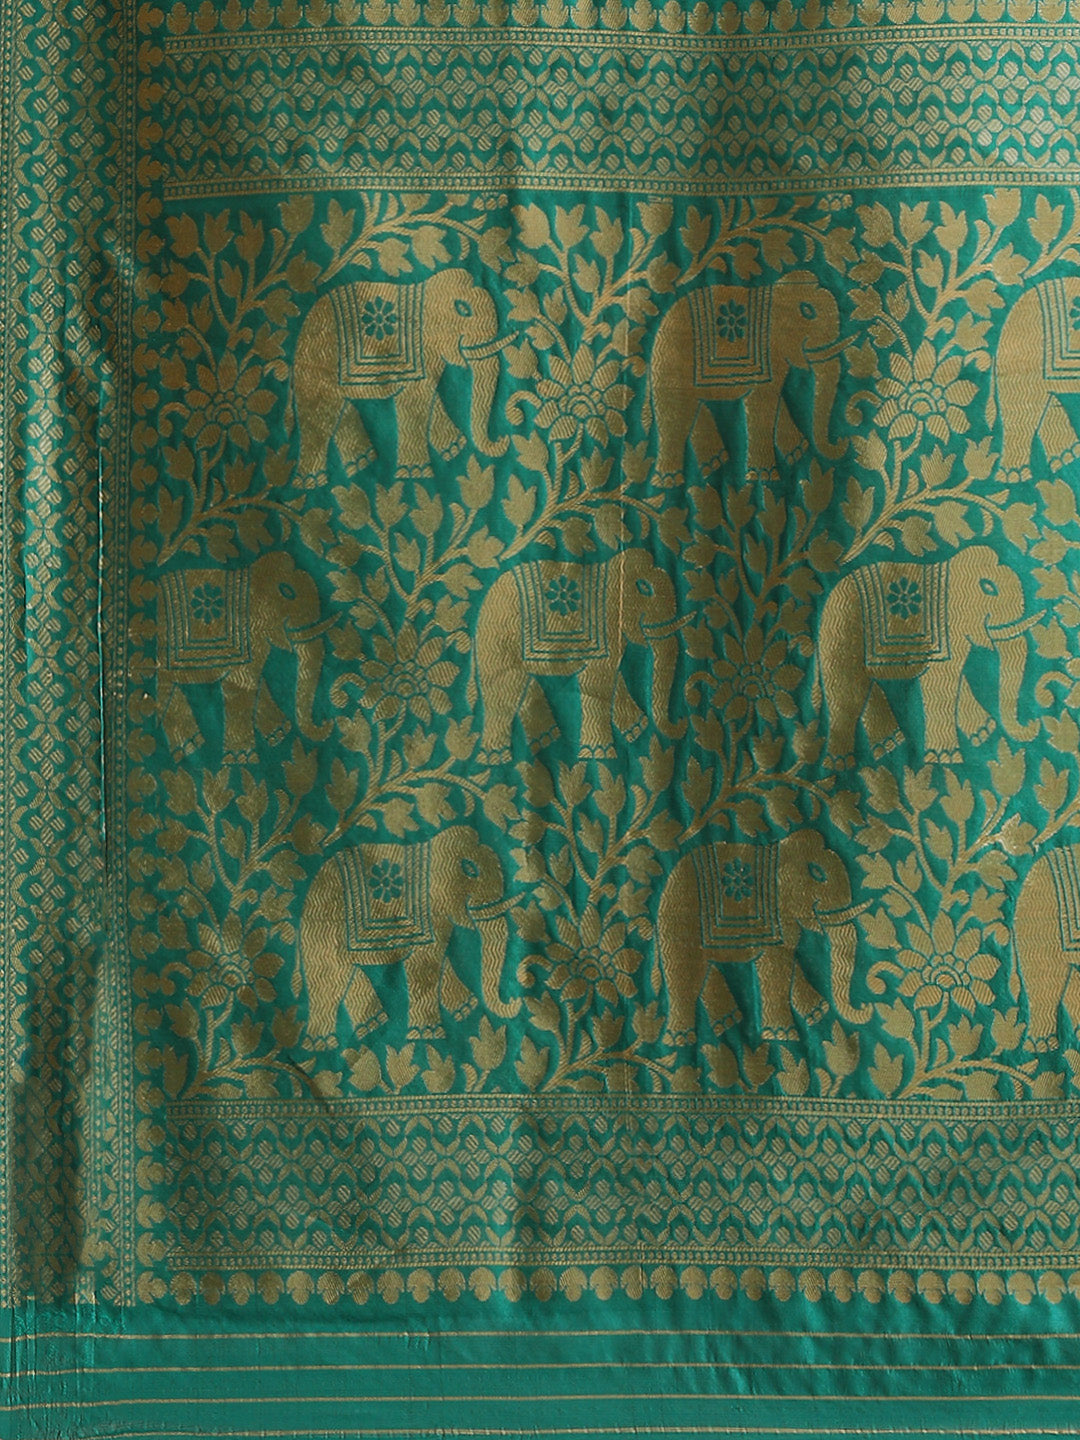 Ishin Women's Art Silk Green Woven Design Banarasi Saree With Blouse Piece